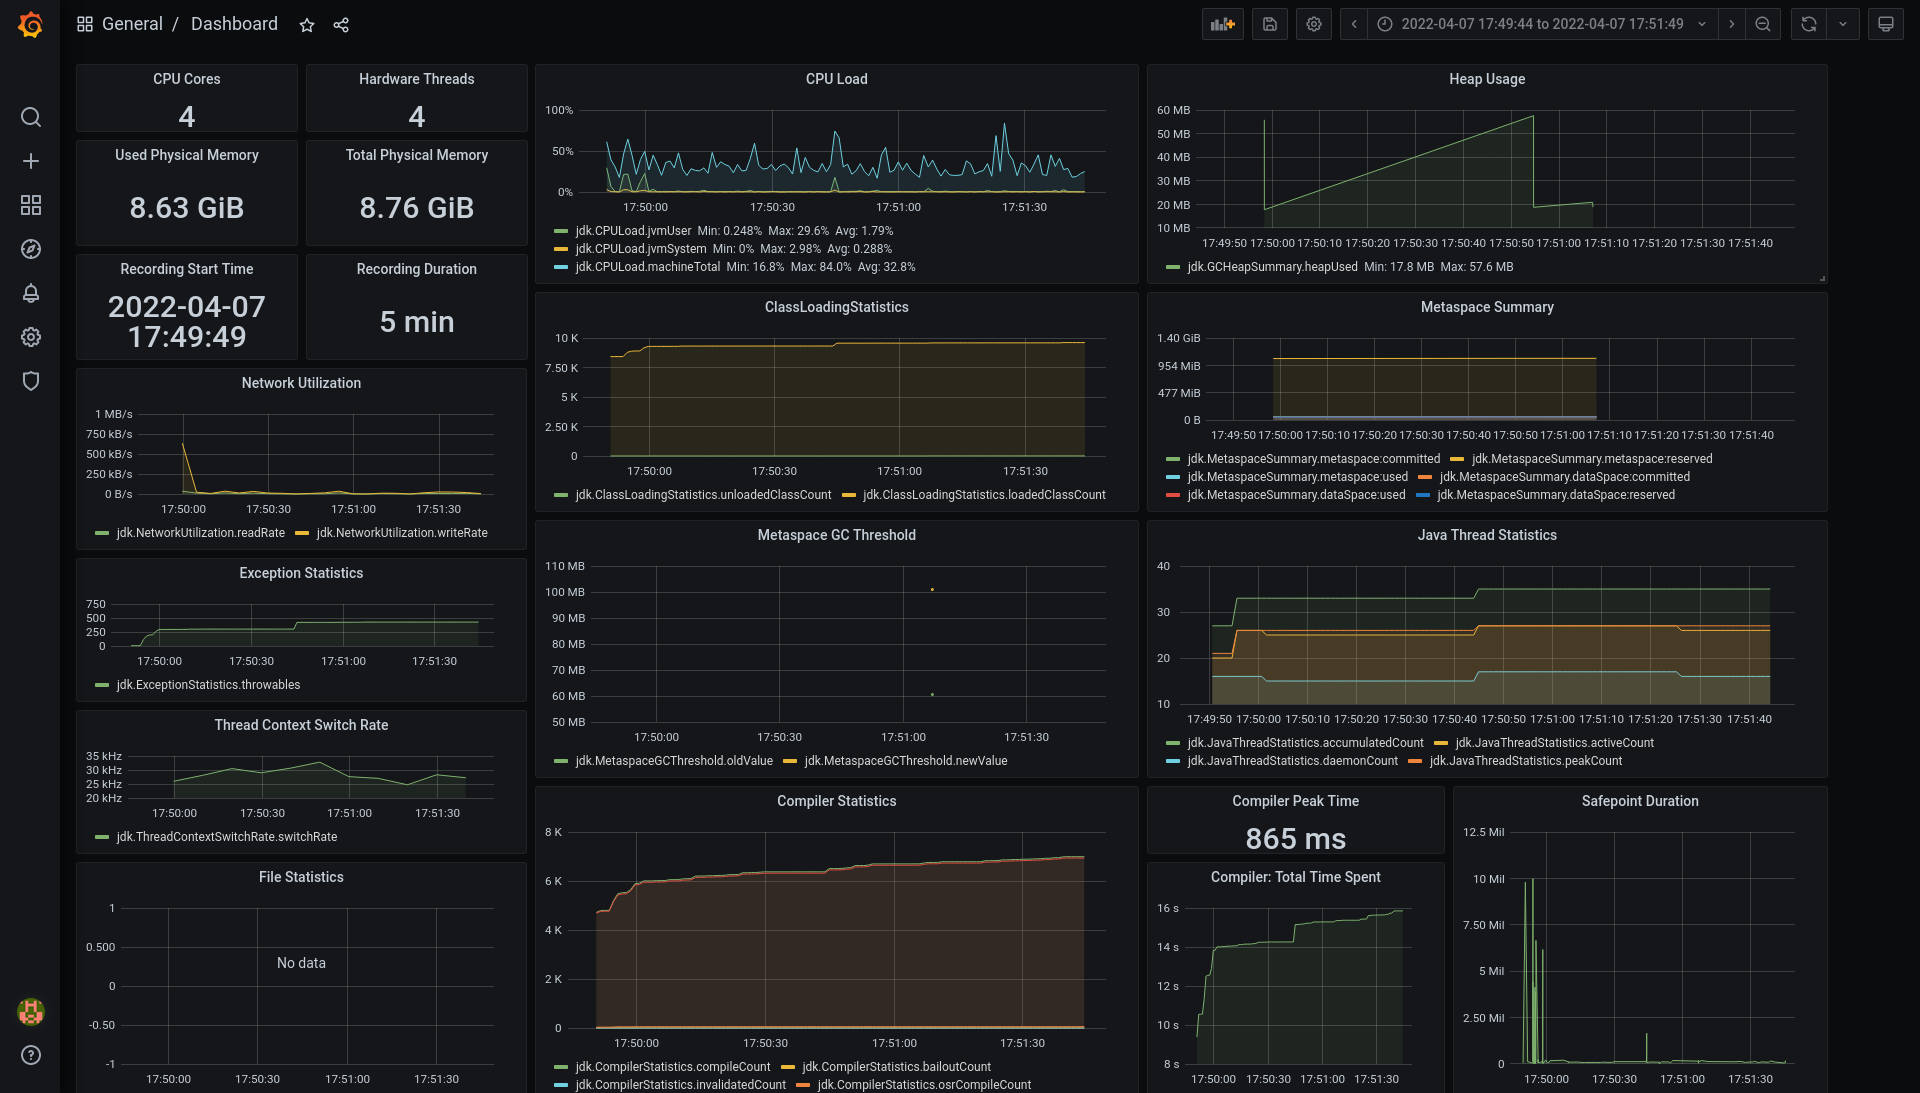 Grafana dashboard displaying metrics from Cryostat